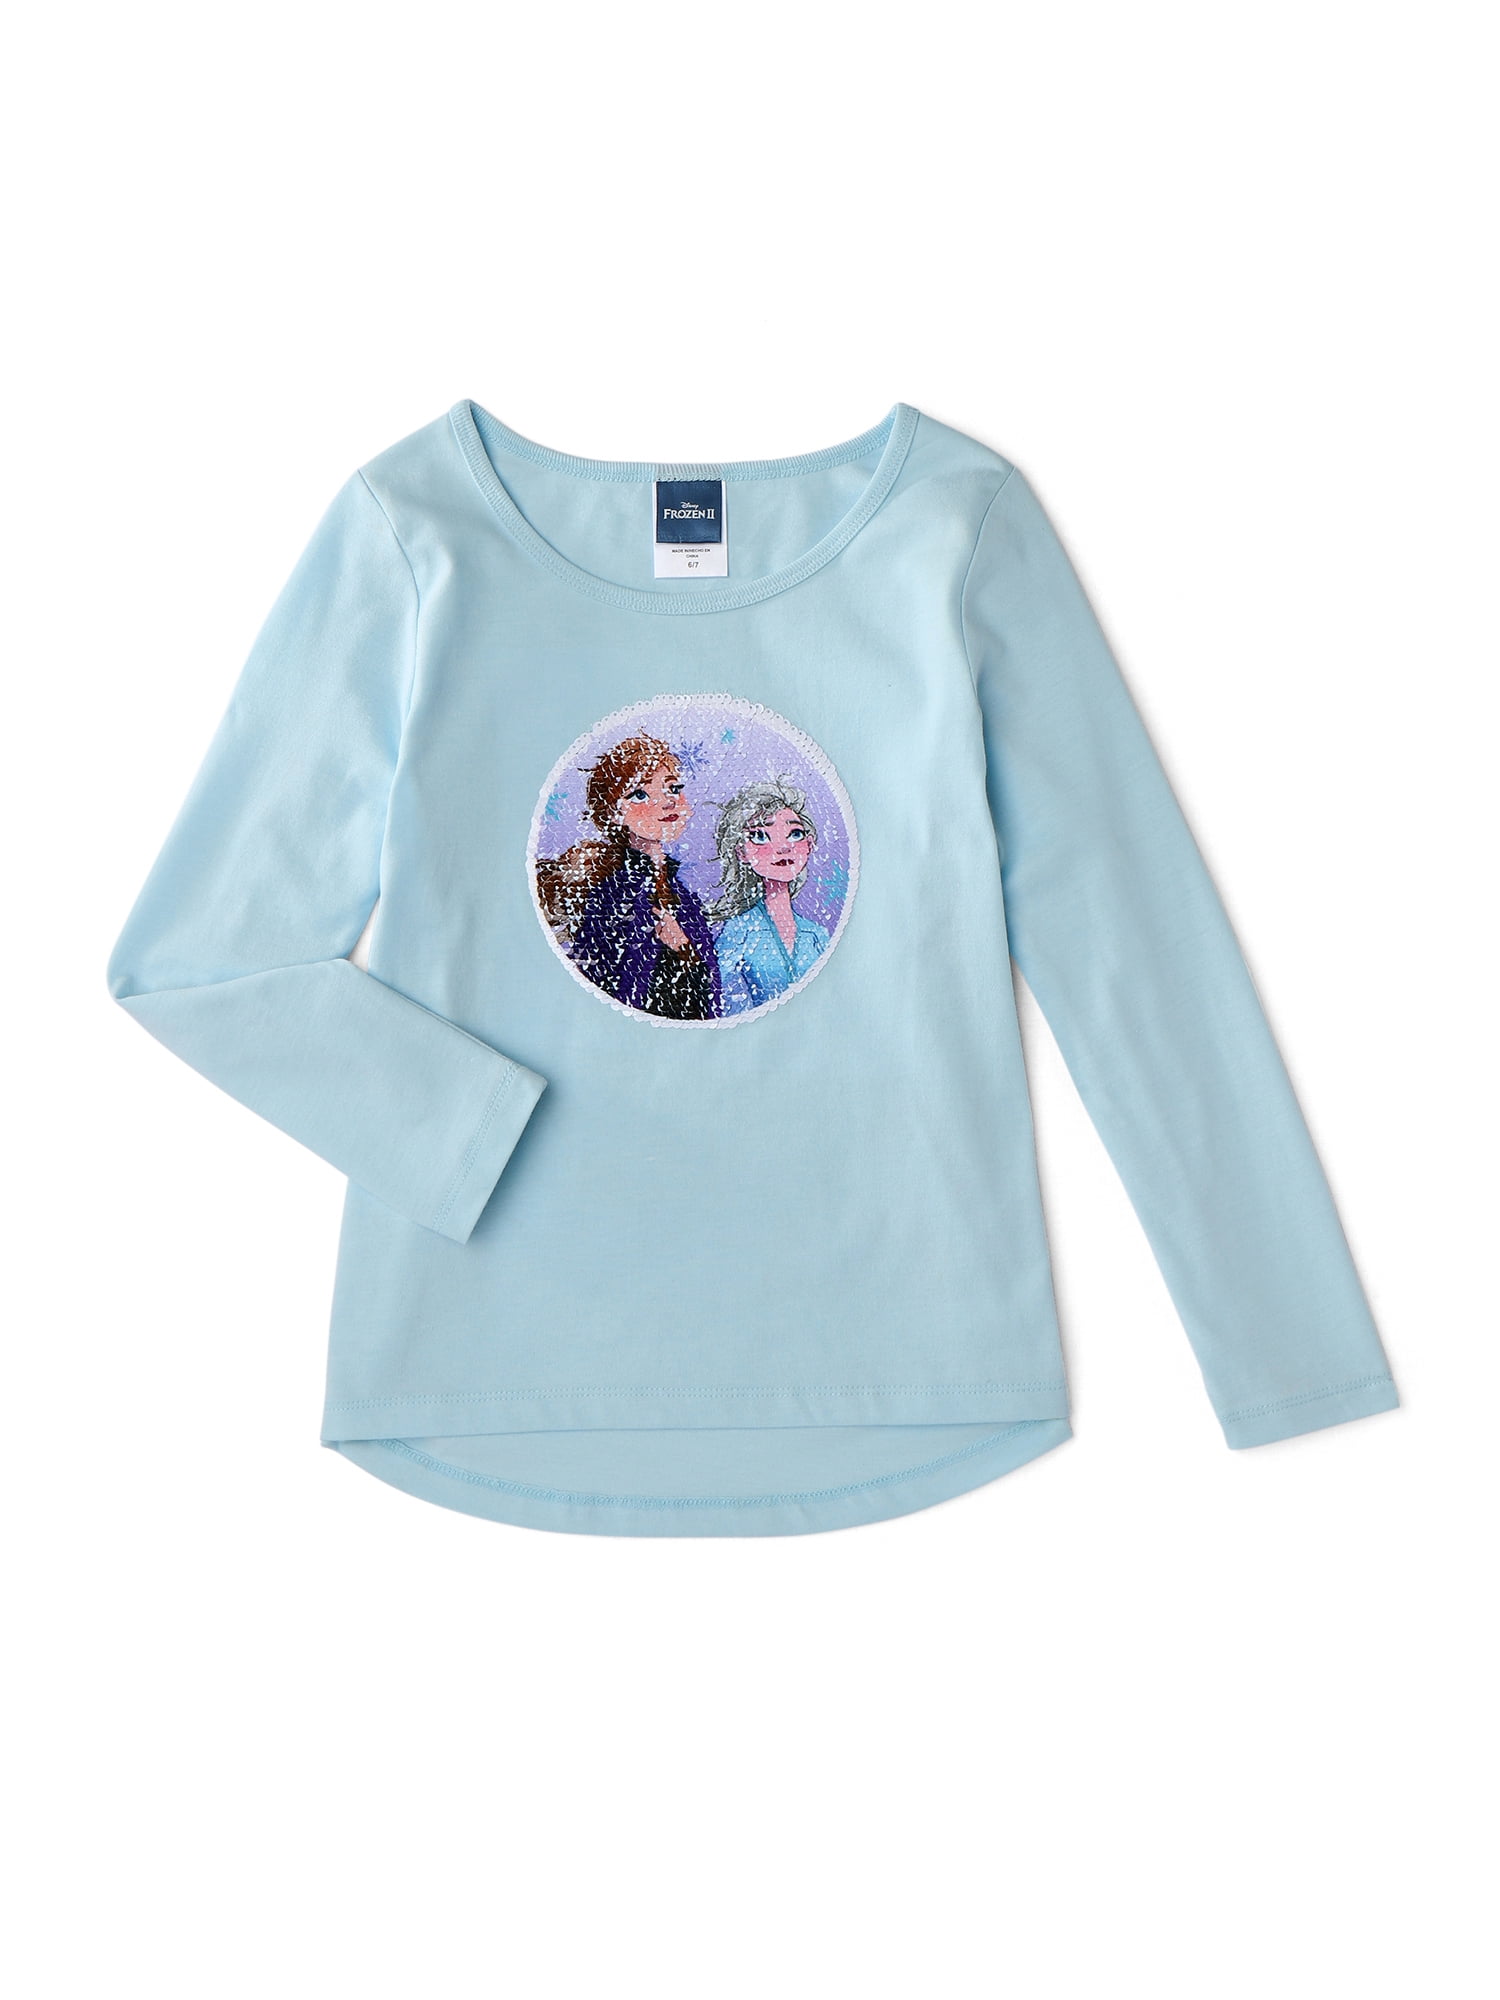 Disney Frozen 2 Girls Elsa & Anna Reversible Sequin T-Shirt, Sizes 4-12 -  Walmart.com